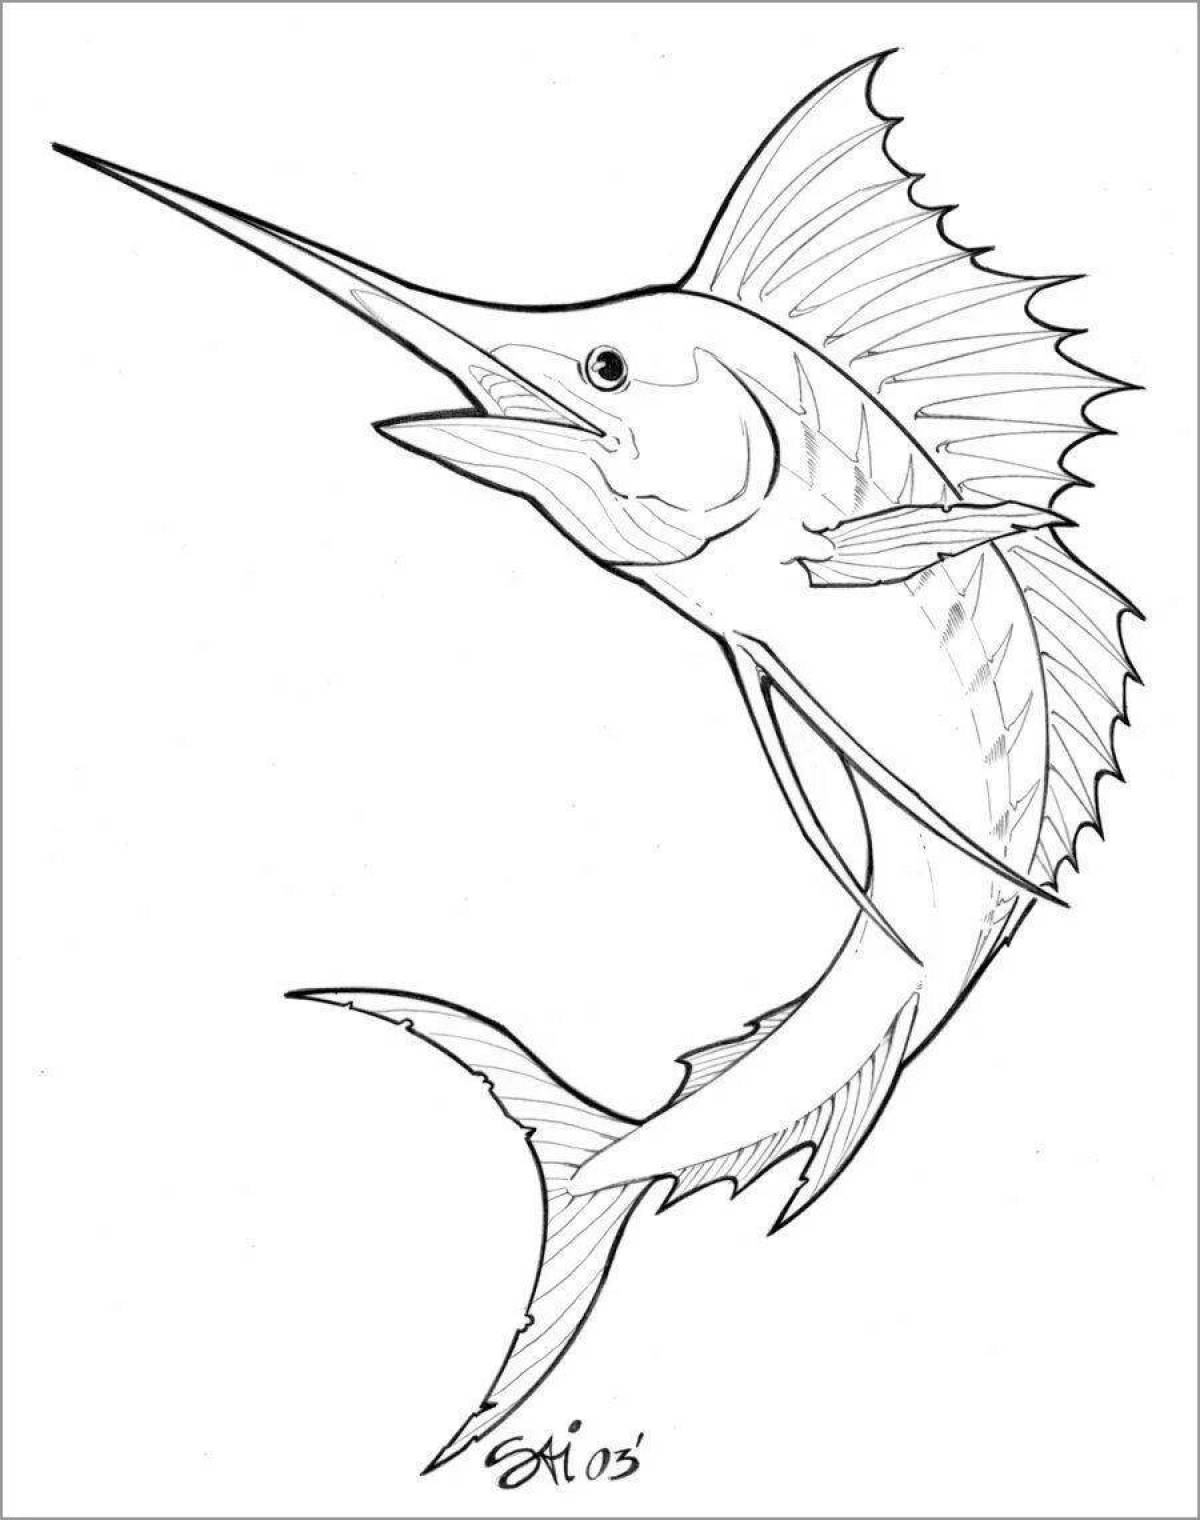 Adorable swordfish coloring page